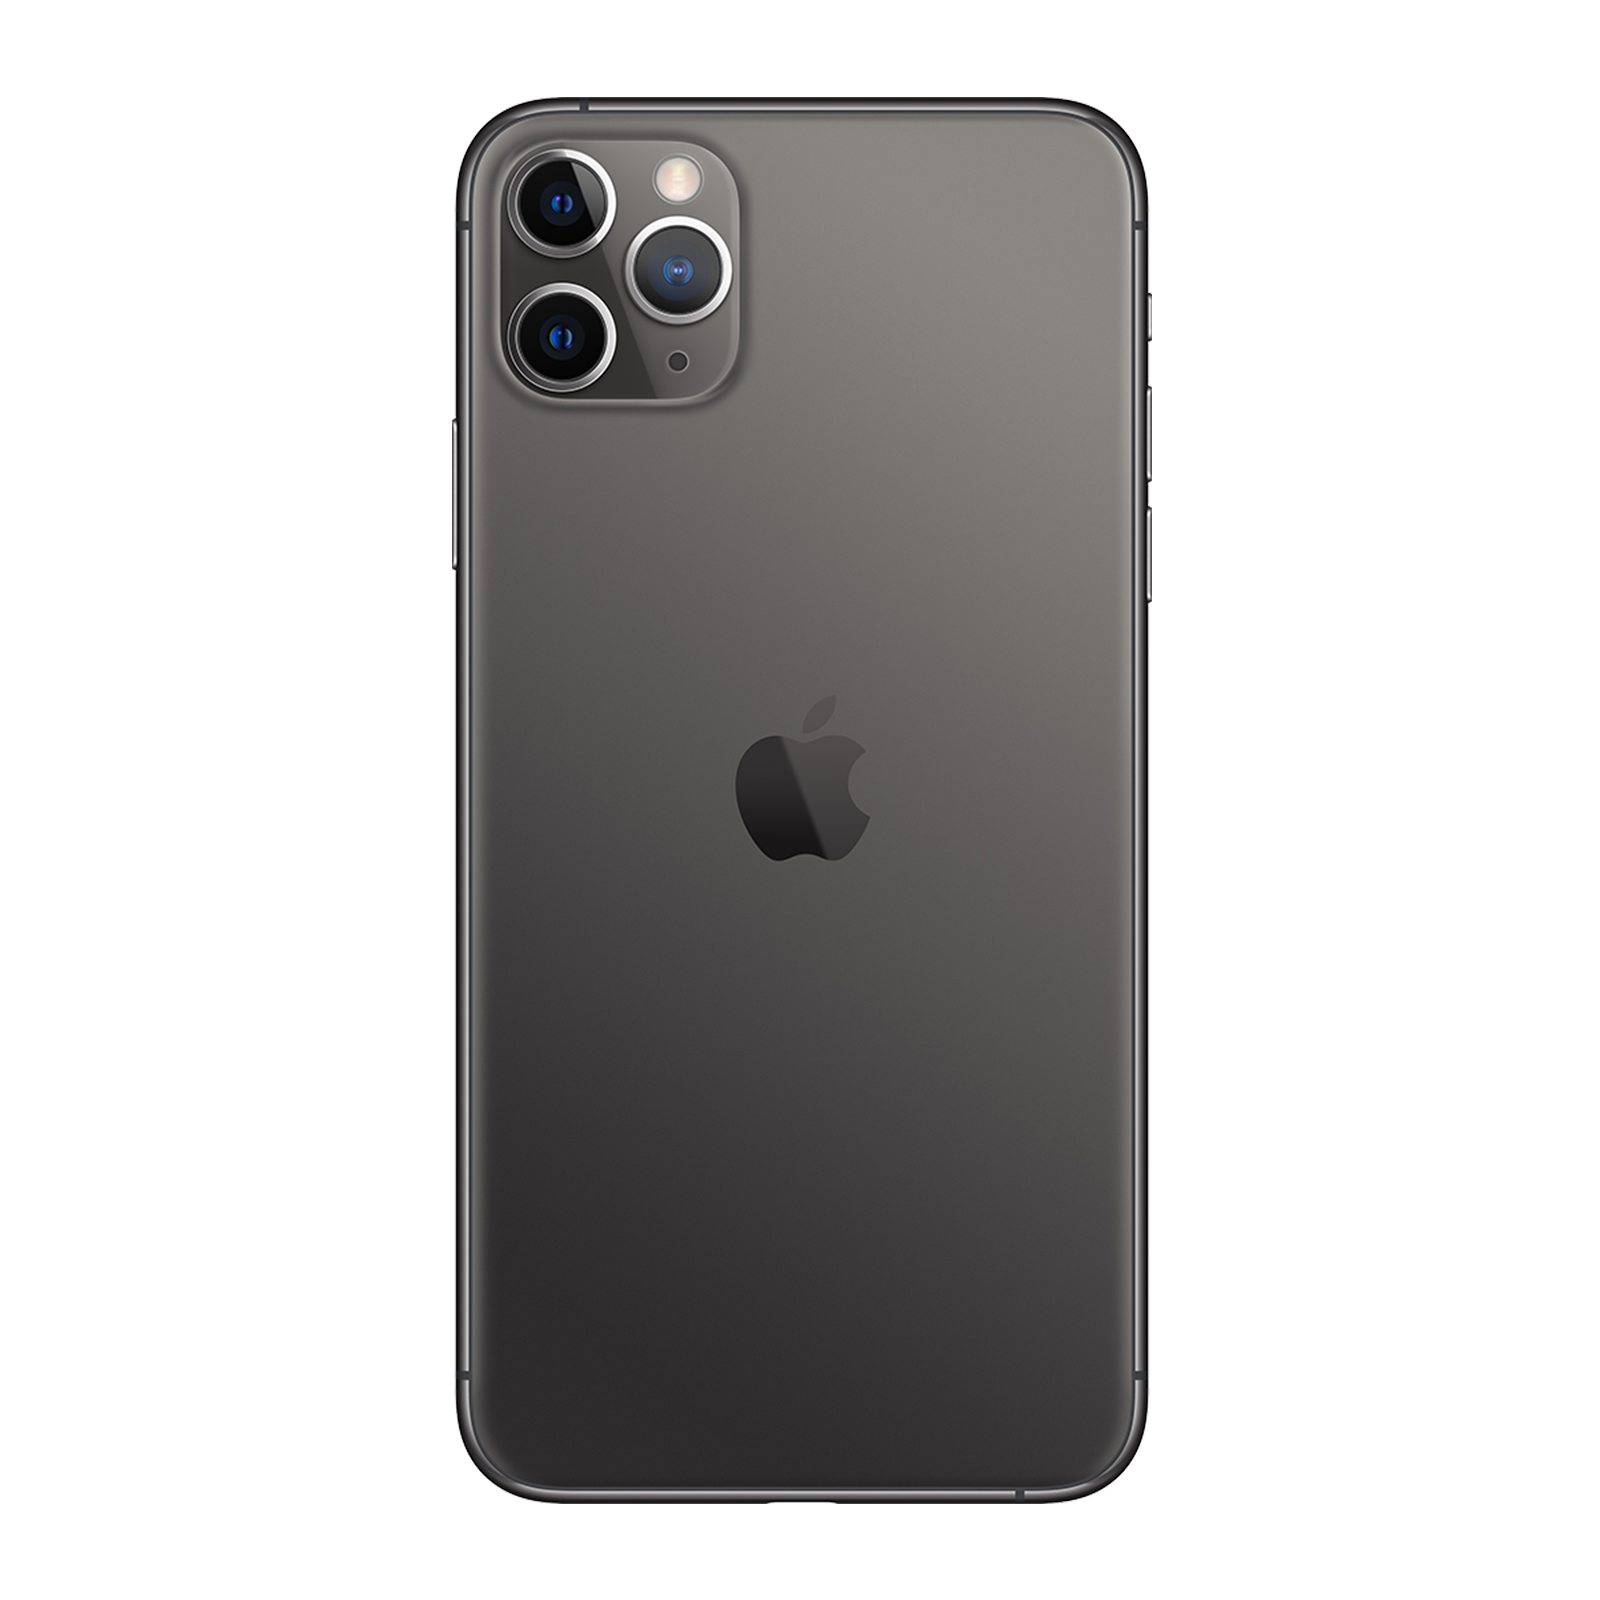 Apple iPhone 11 Pro Max 256GB Space Grey Pristine - Unlocked